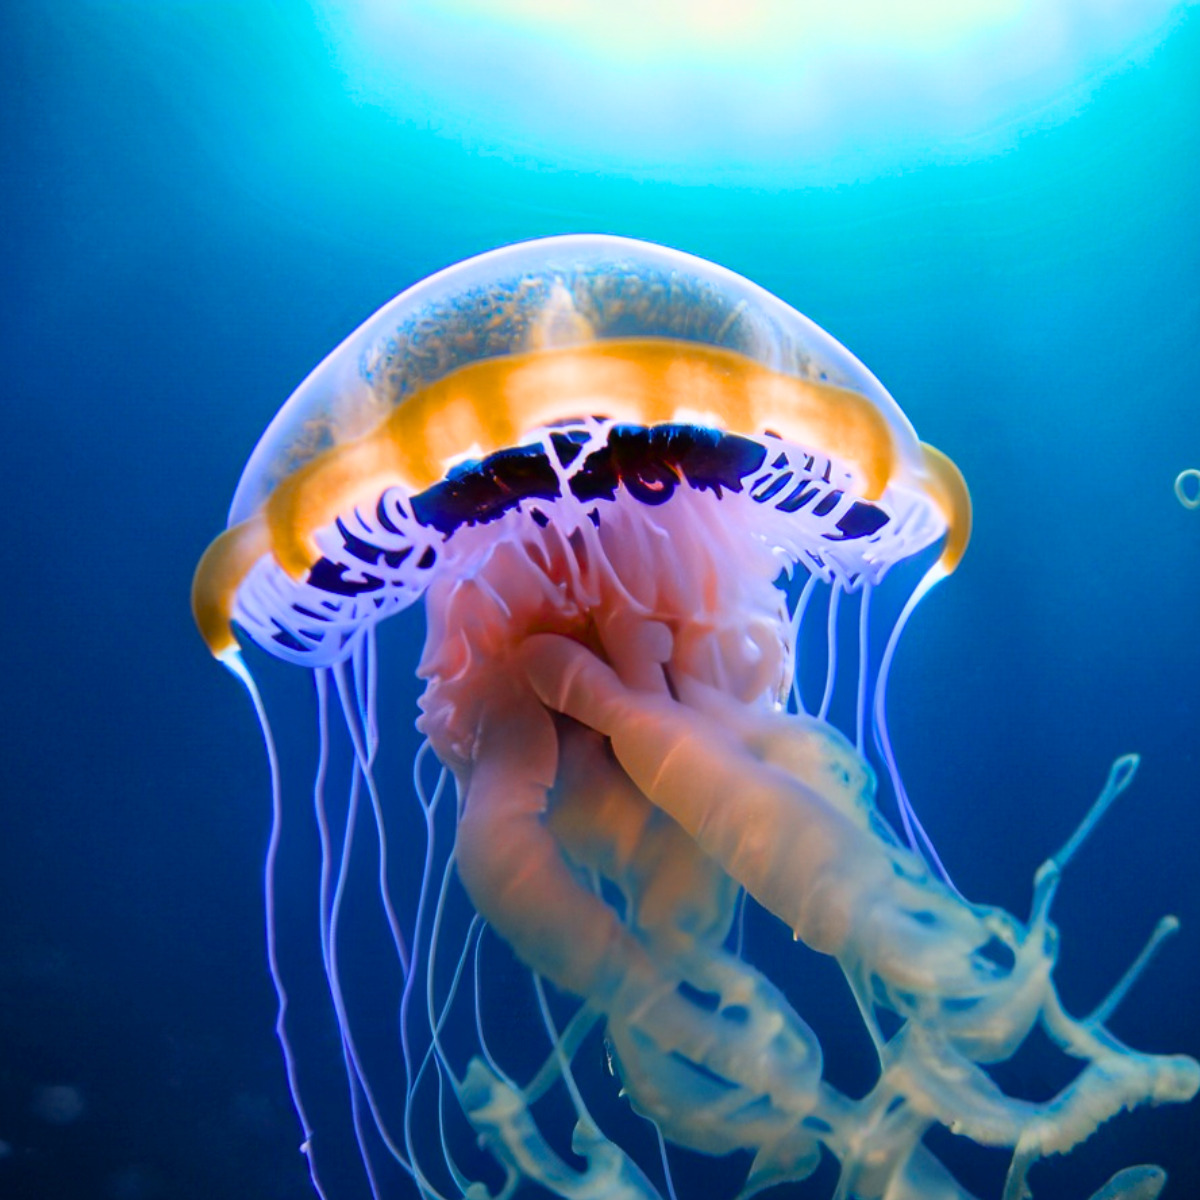 Jellyfish sting feels, types, symptoms, treatment & sensation